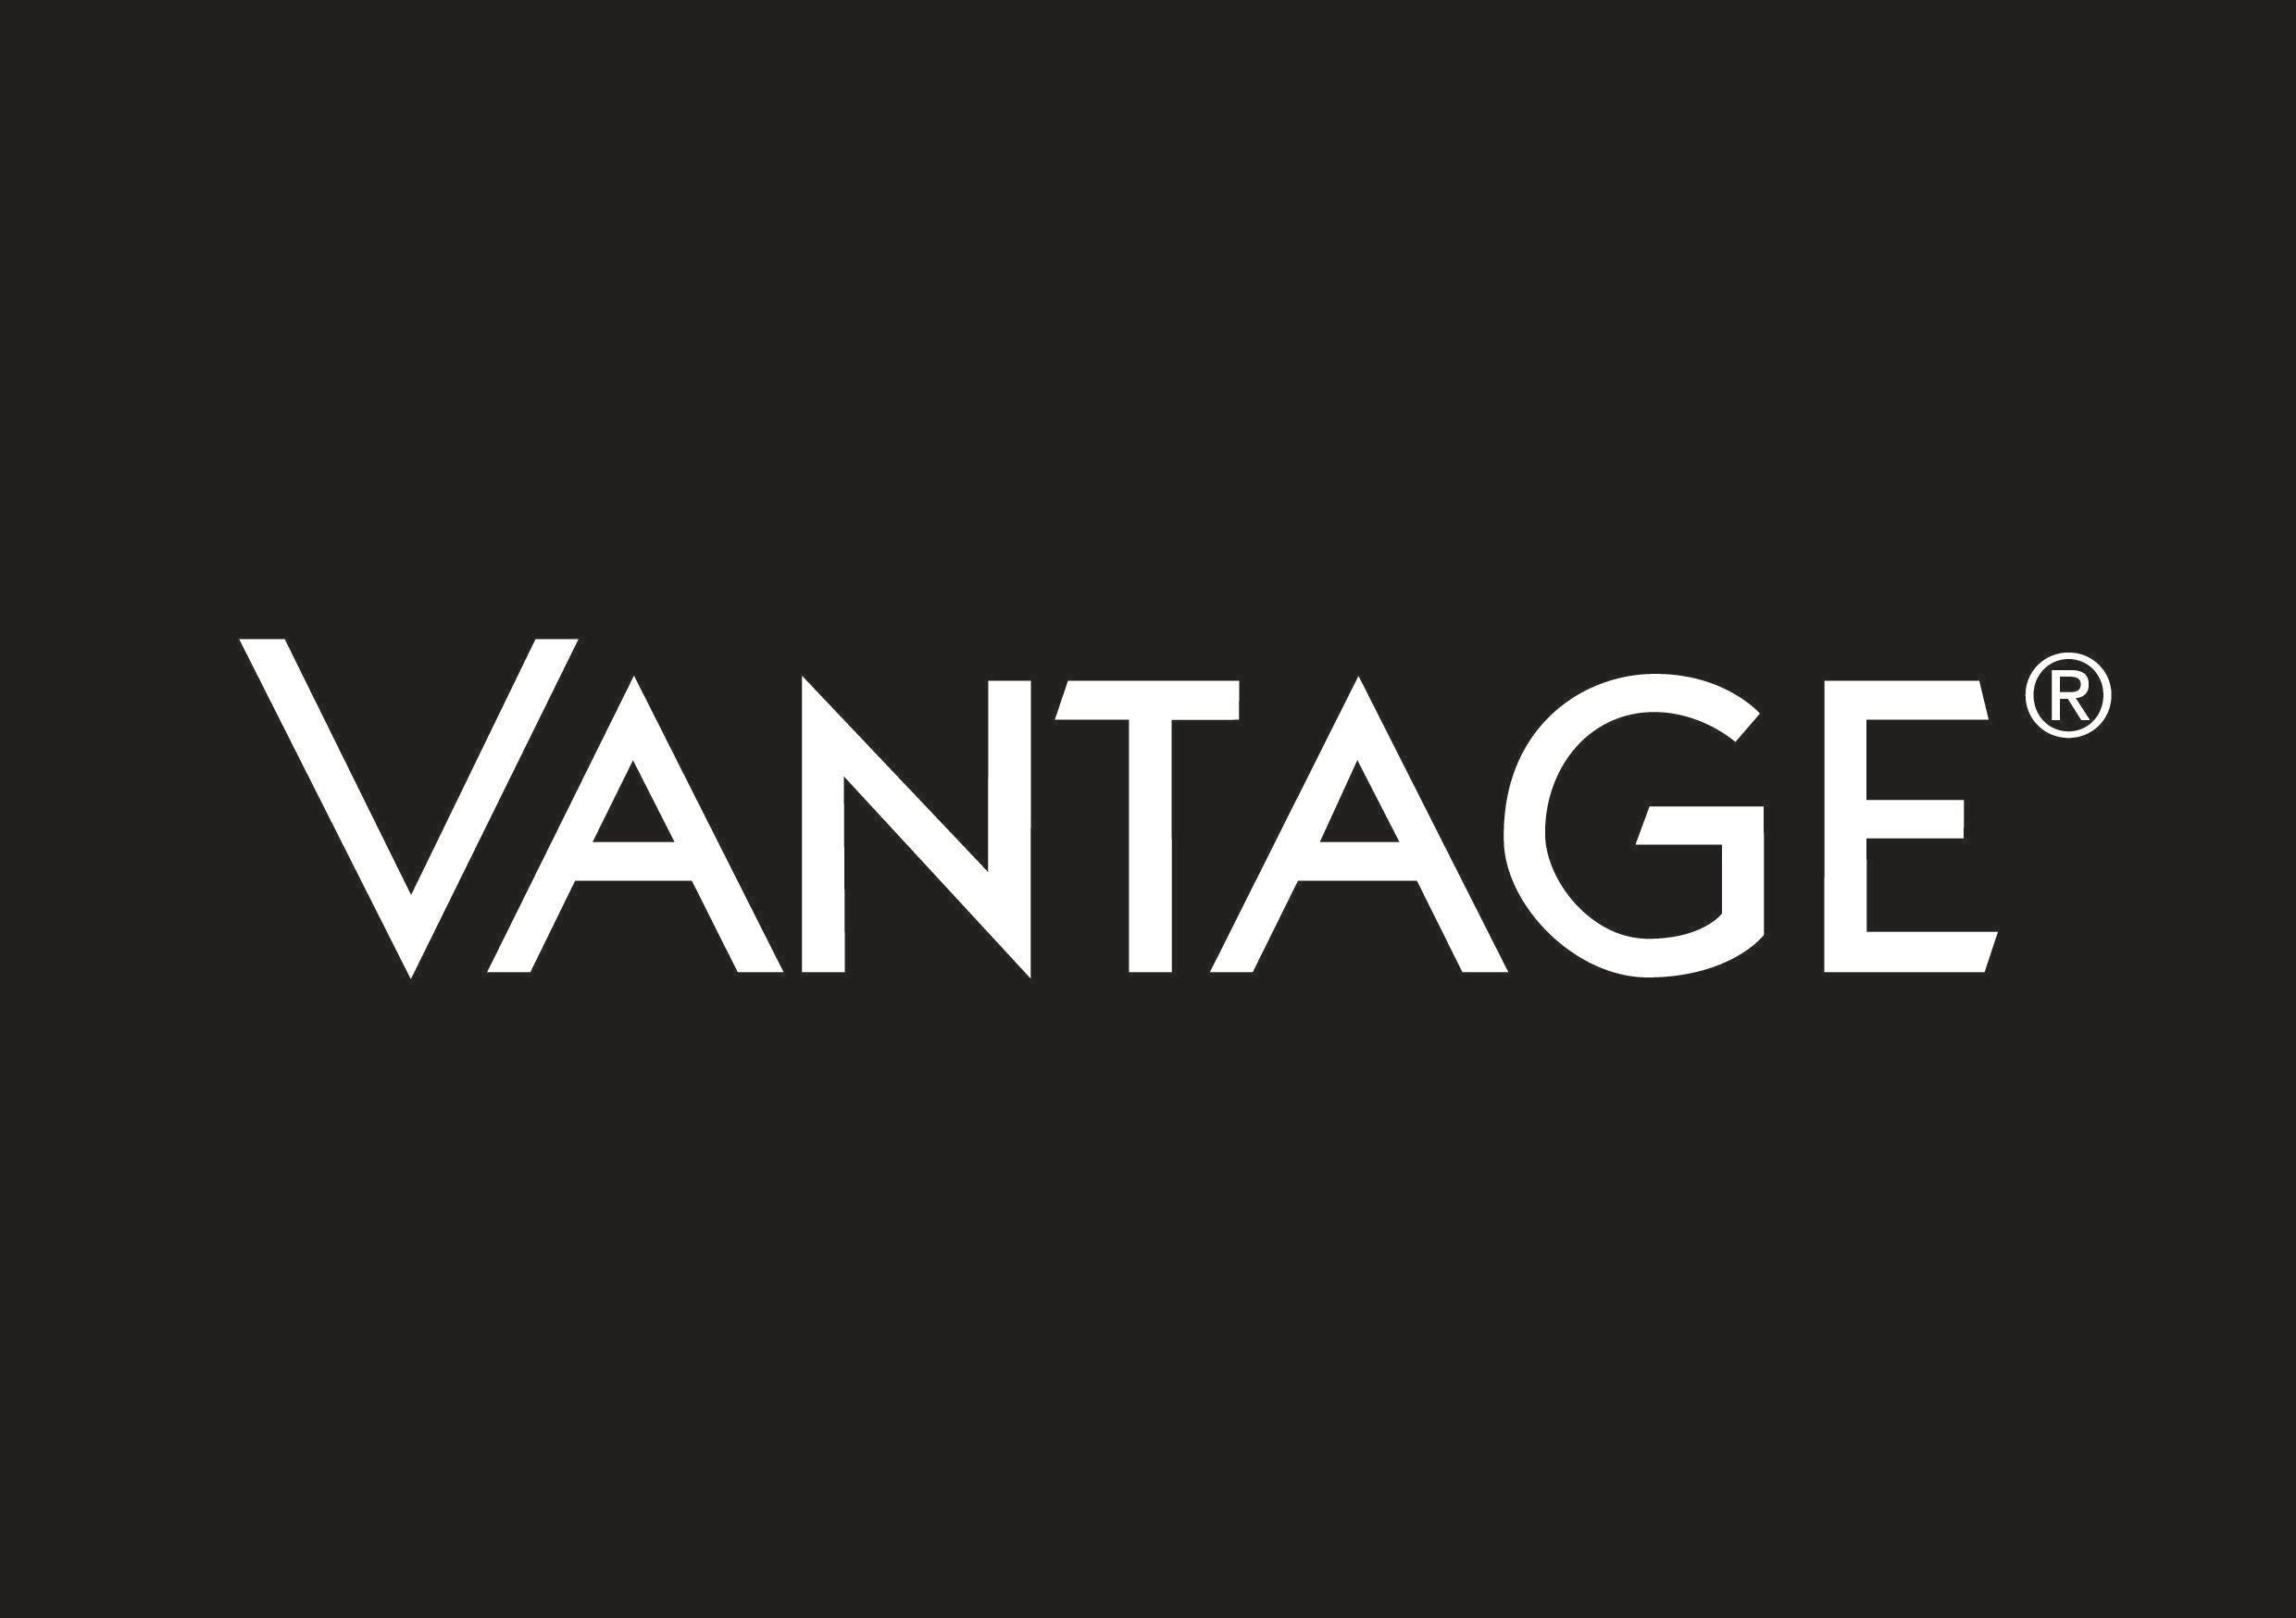 Vantage Logo - Downloads | Vantage Film